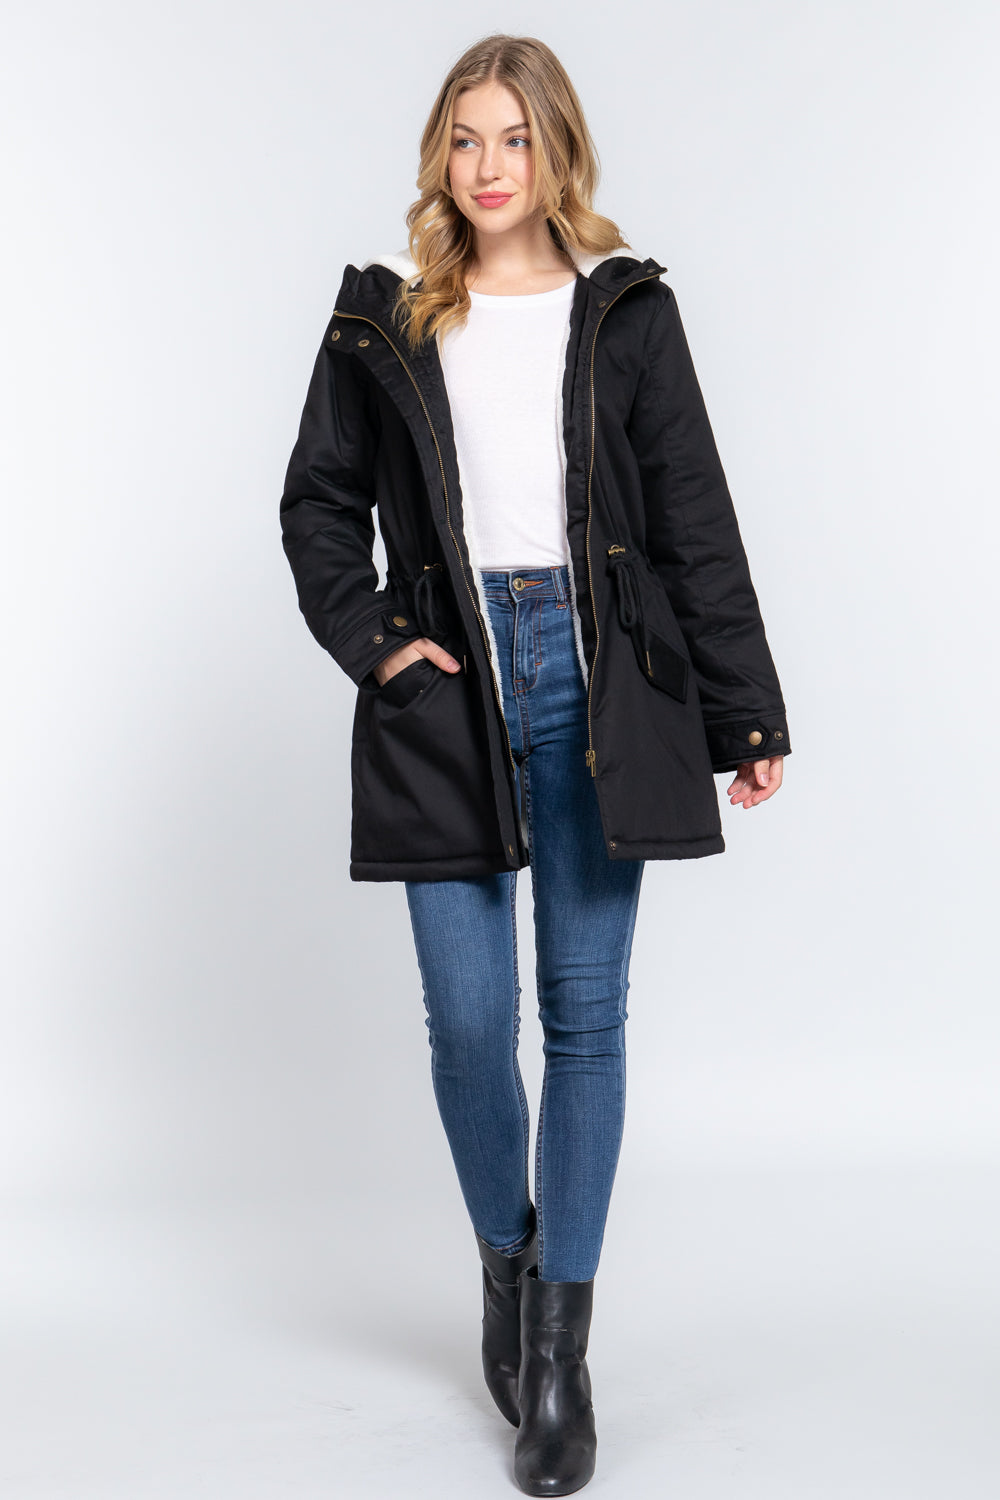 Black M - Fleece Lined Fur Hoodie Utility Jacket - 4 colors - womens jacket at TFC&H Co.